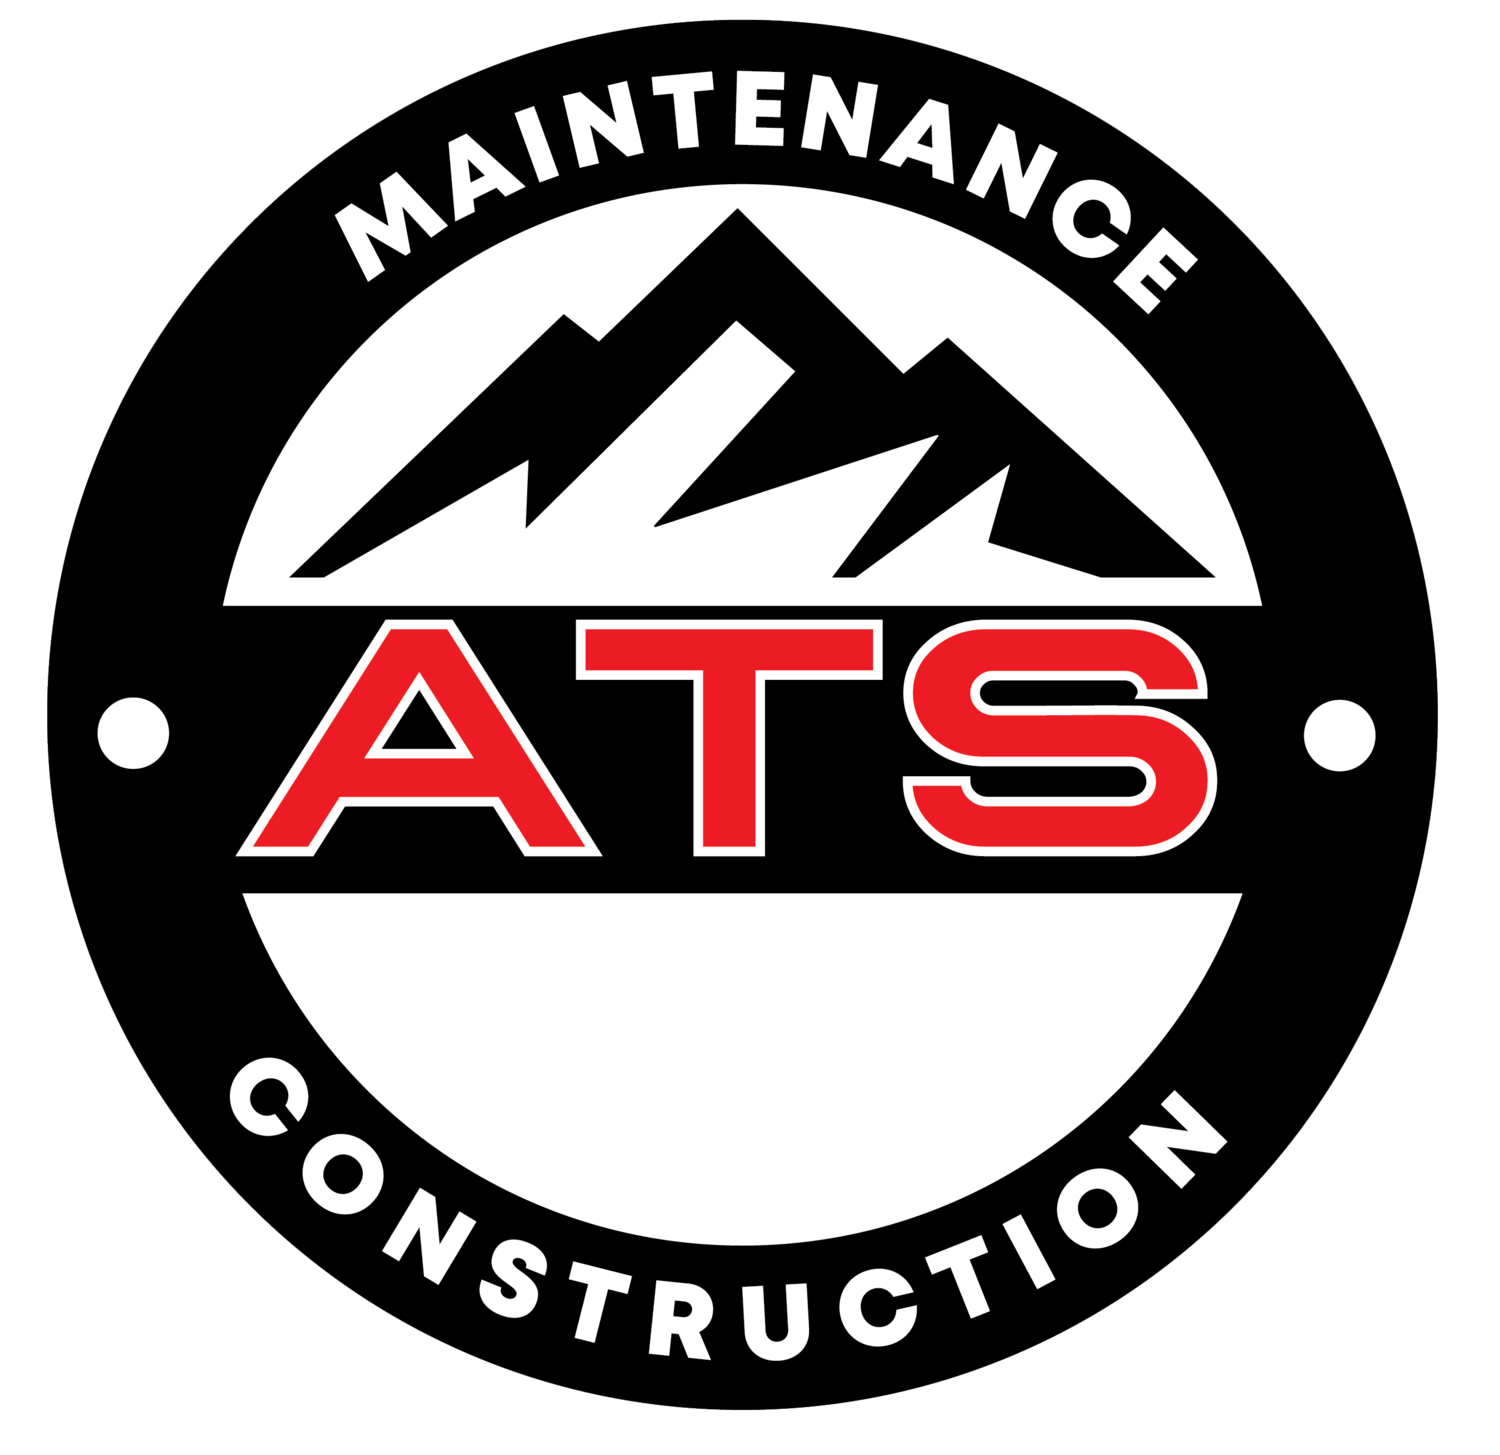 ATS Maintenance and Construction